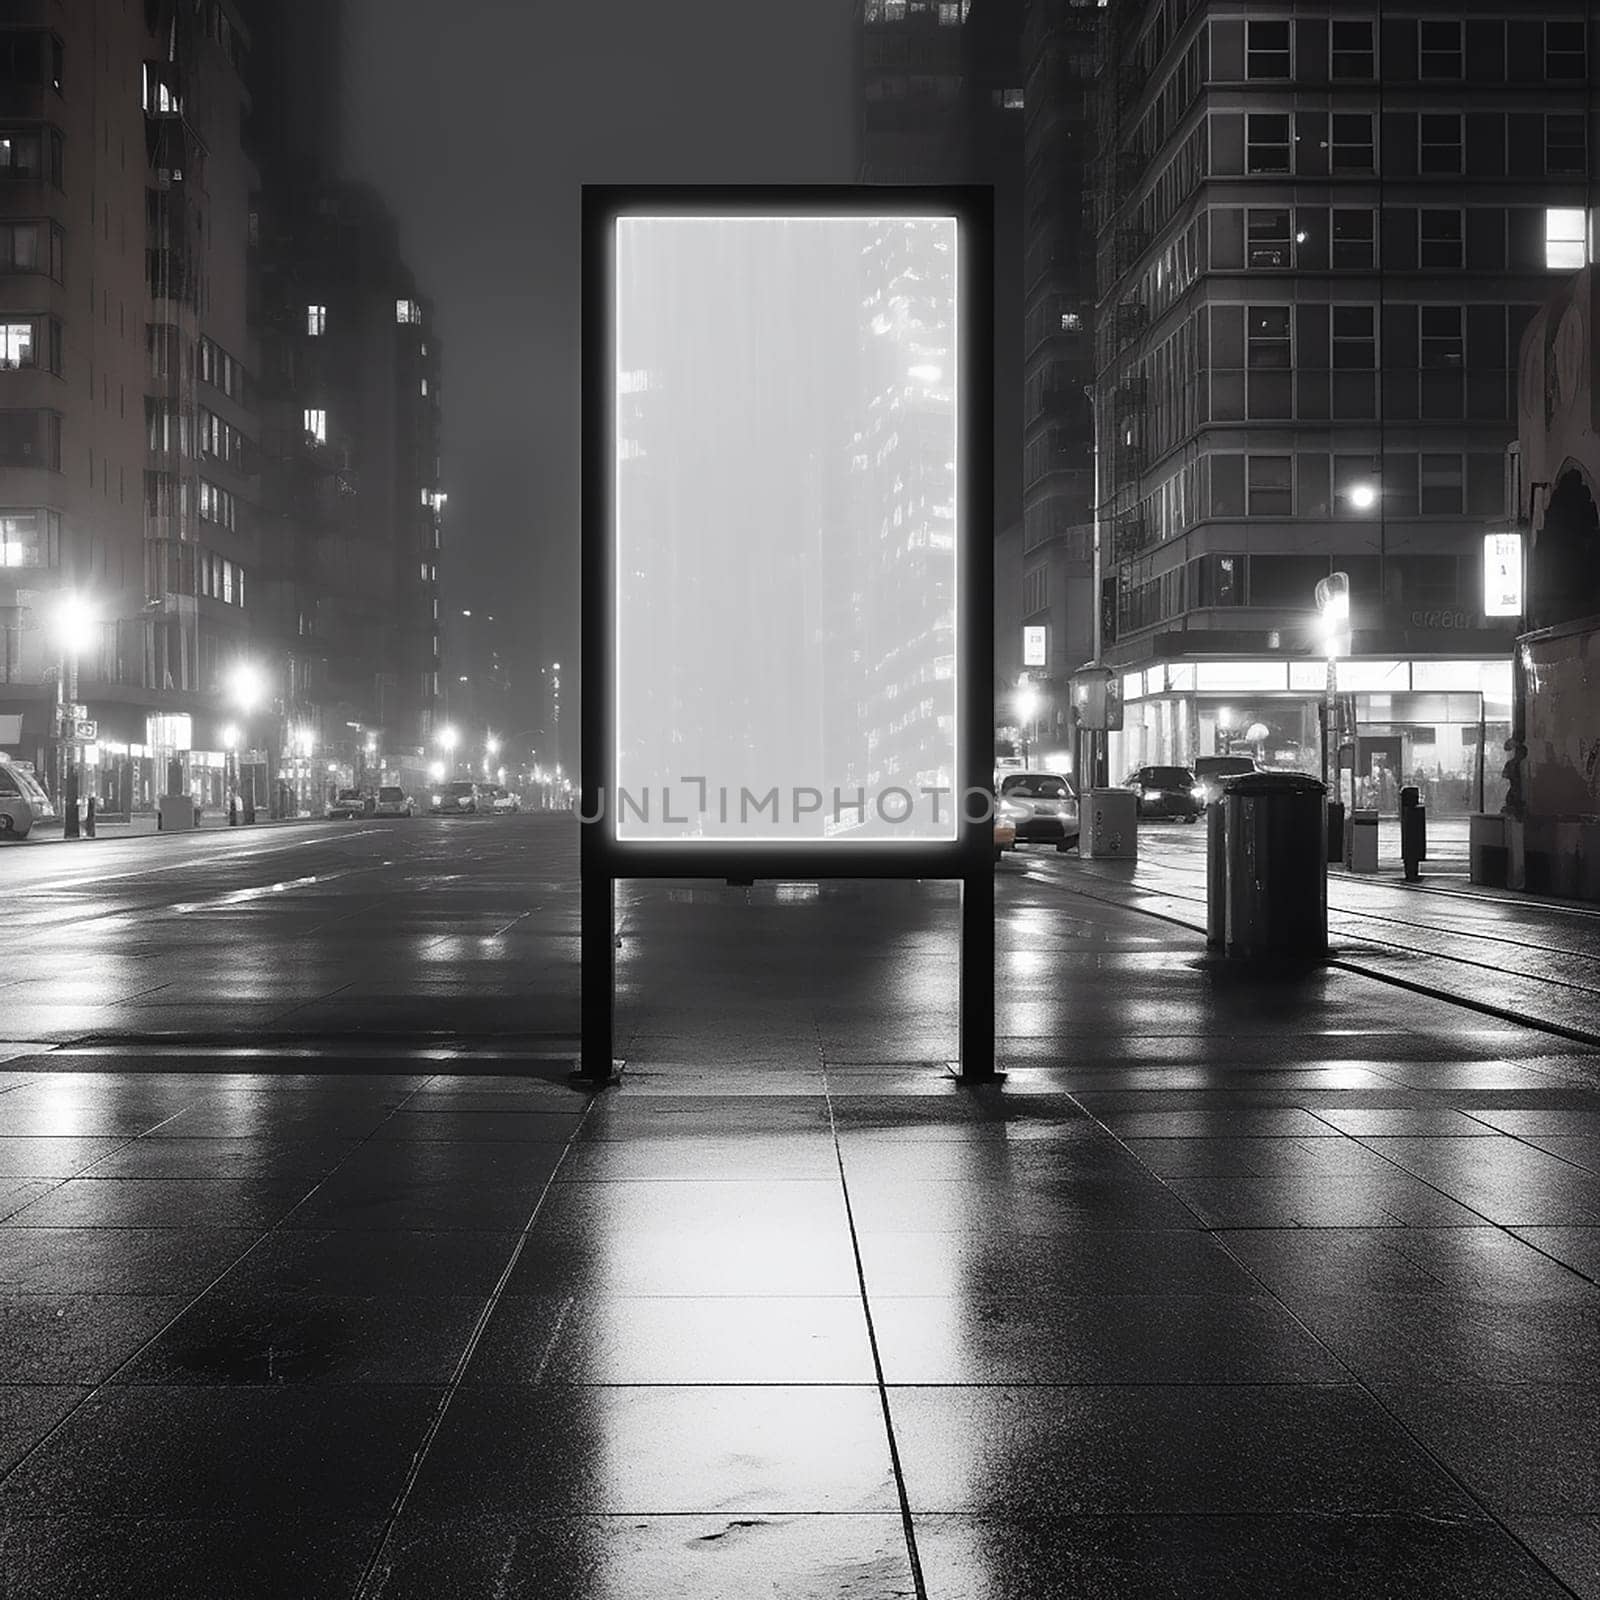 Empty billboard mock up on a misty, illuminated city street at night. by Hype2art